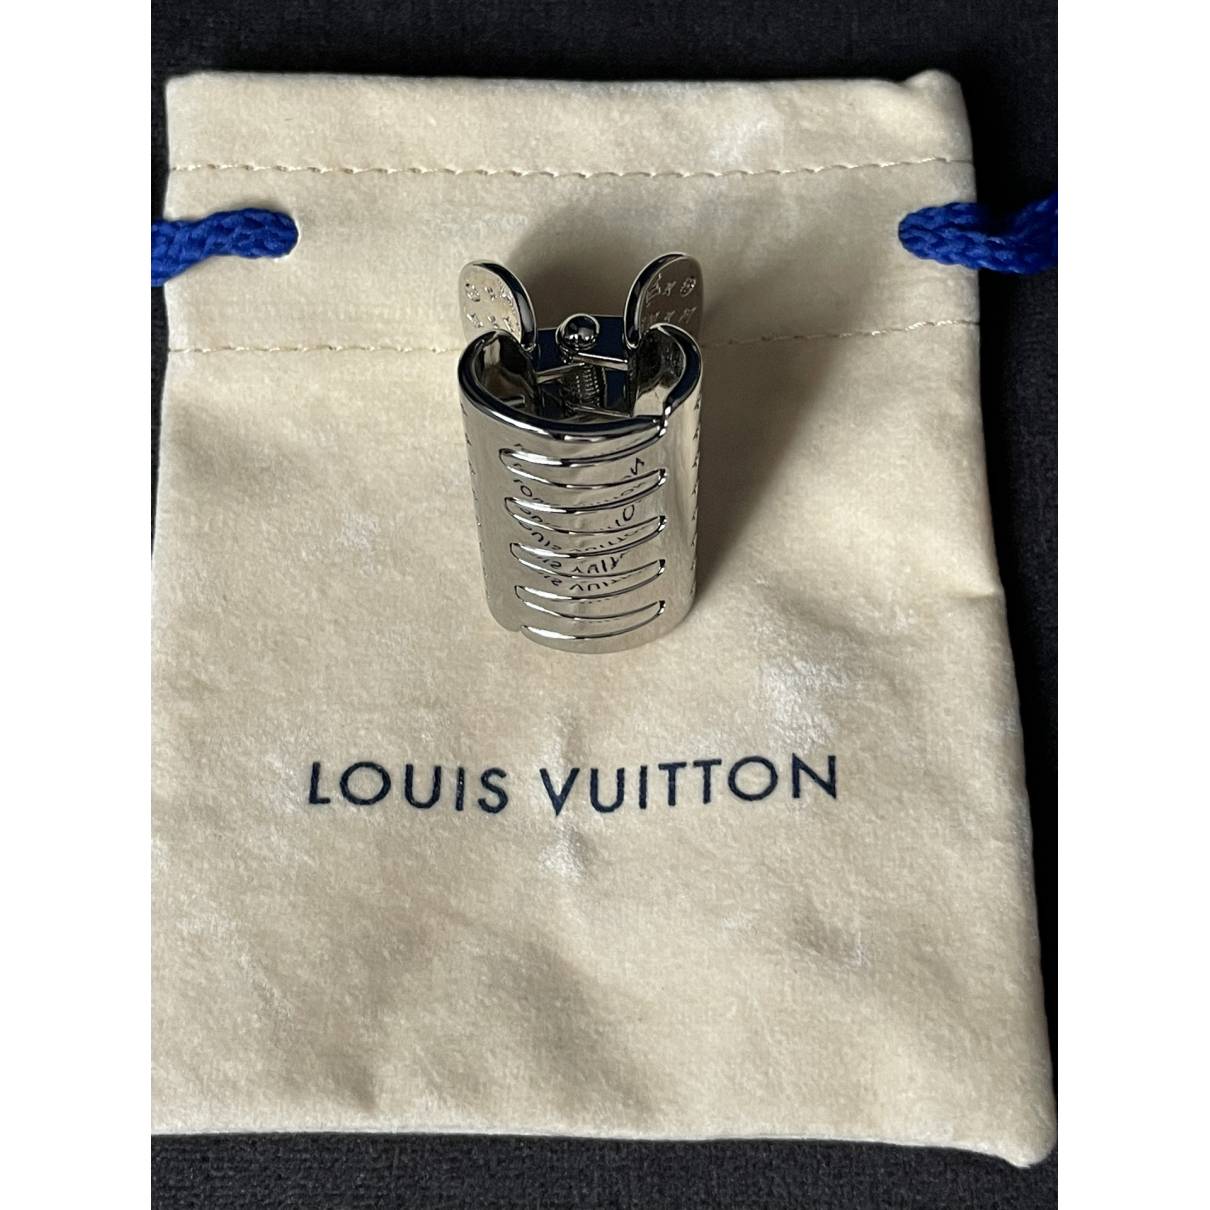 Louis Vuitton unboxing - Nanogram Hair Accessories SOLD OUT